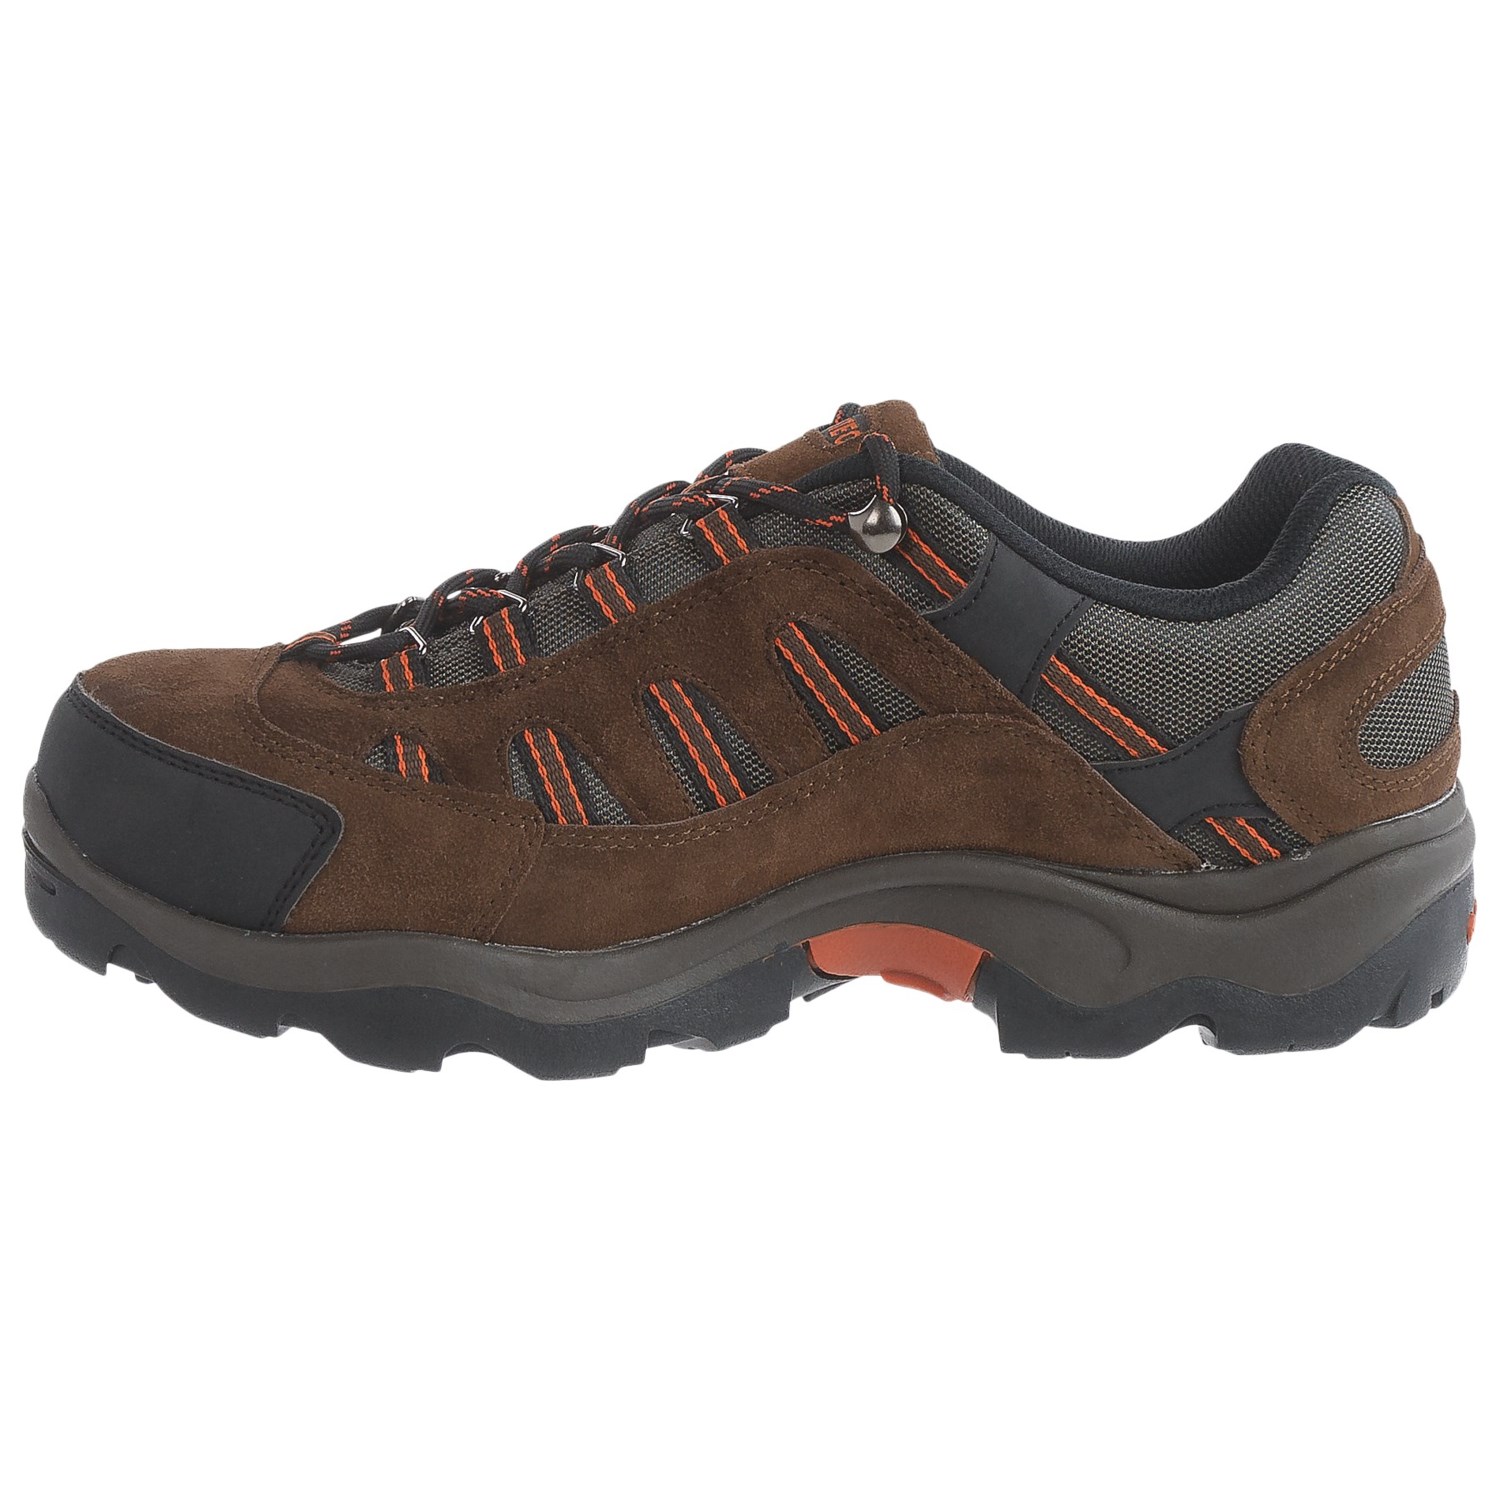 Hi-Tec Bandera Low Hiking Shoes (For Men) - Save 70%